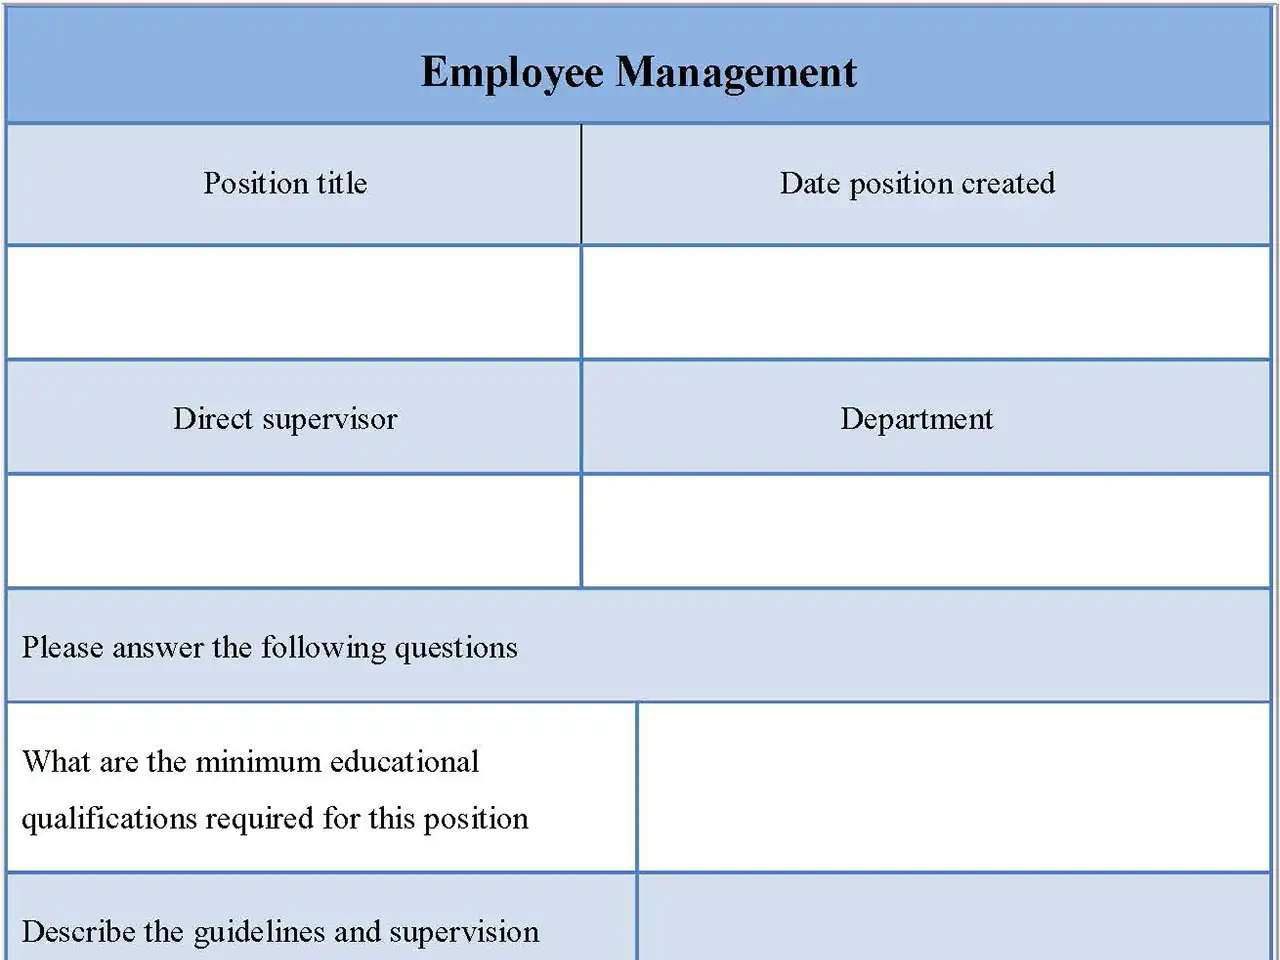 Employee Management Form